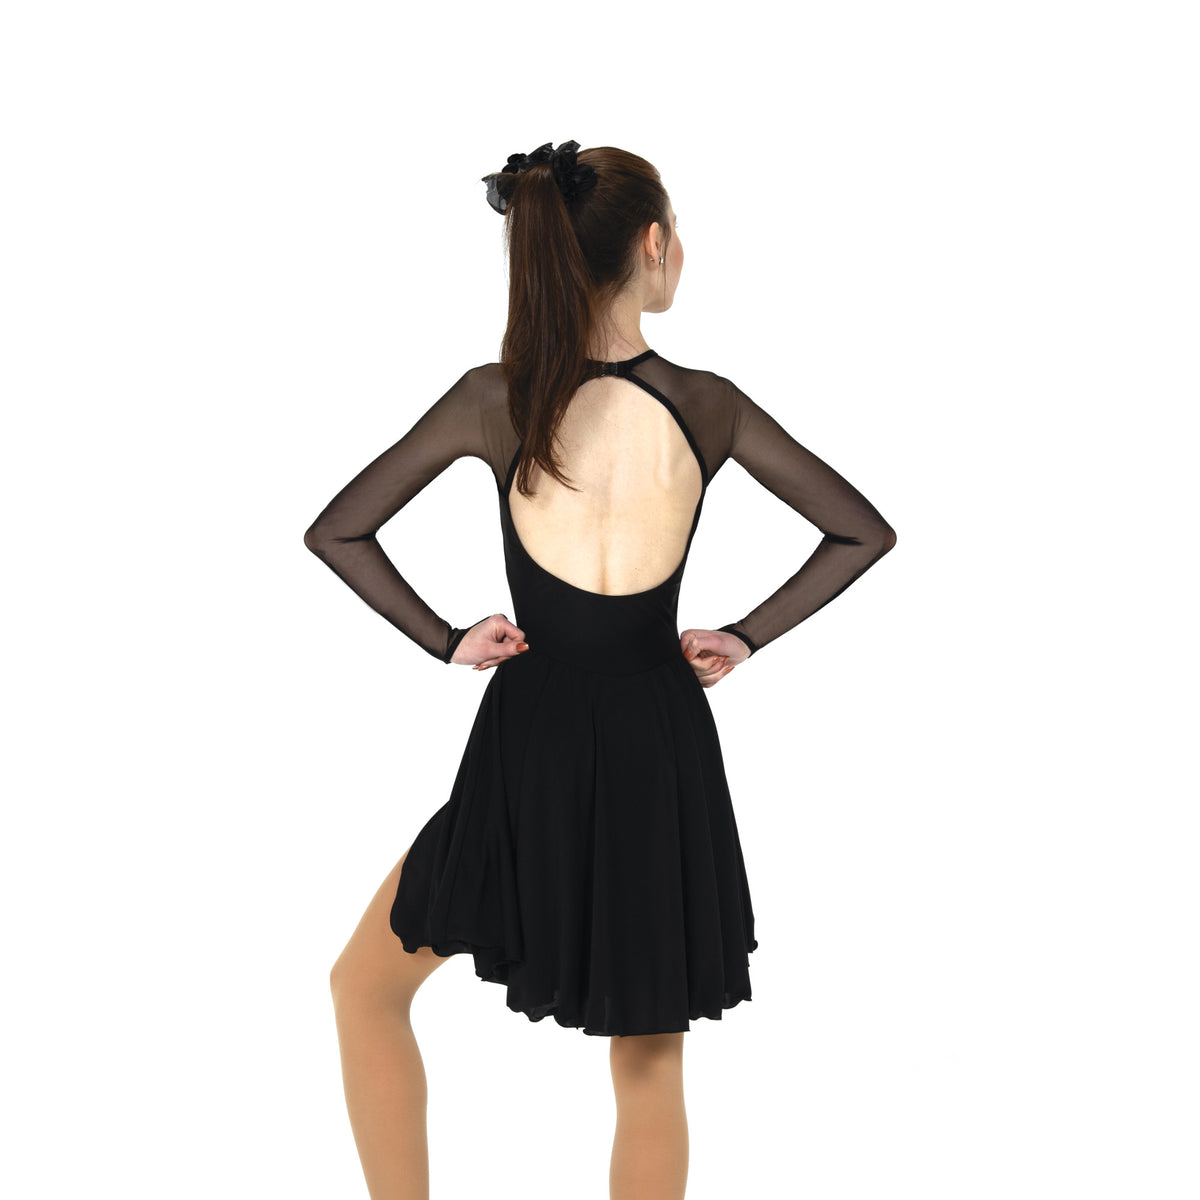 Sweetheart Dance Dress Plain: Black